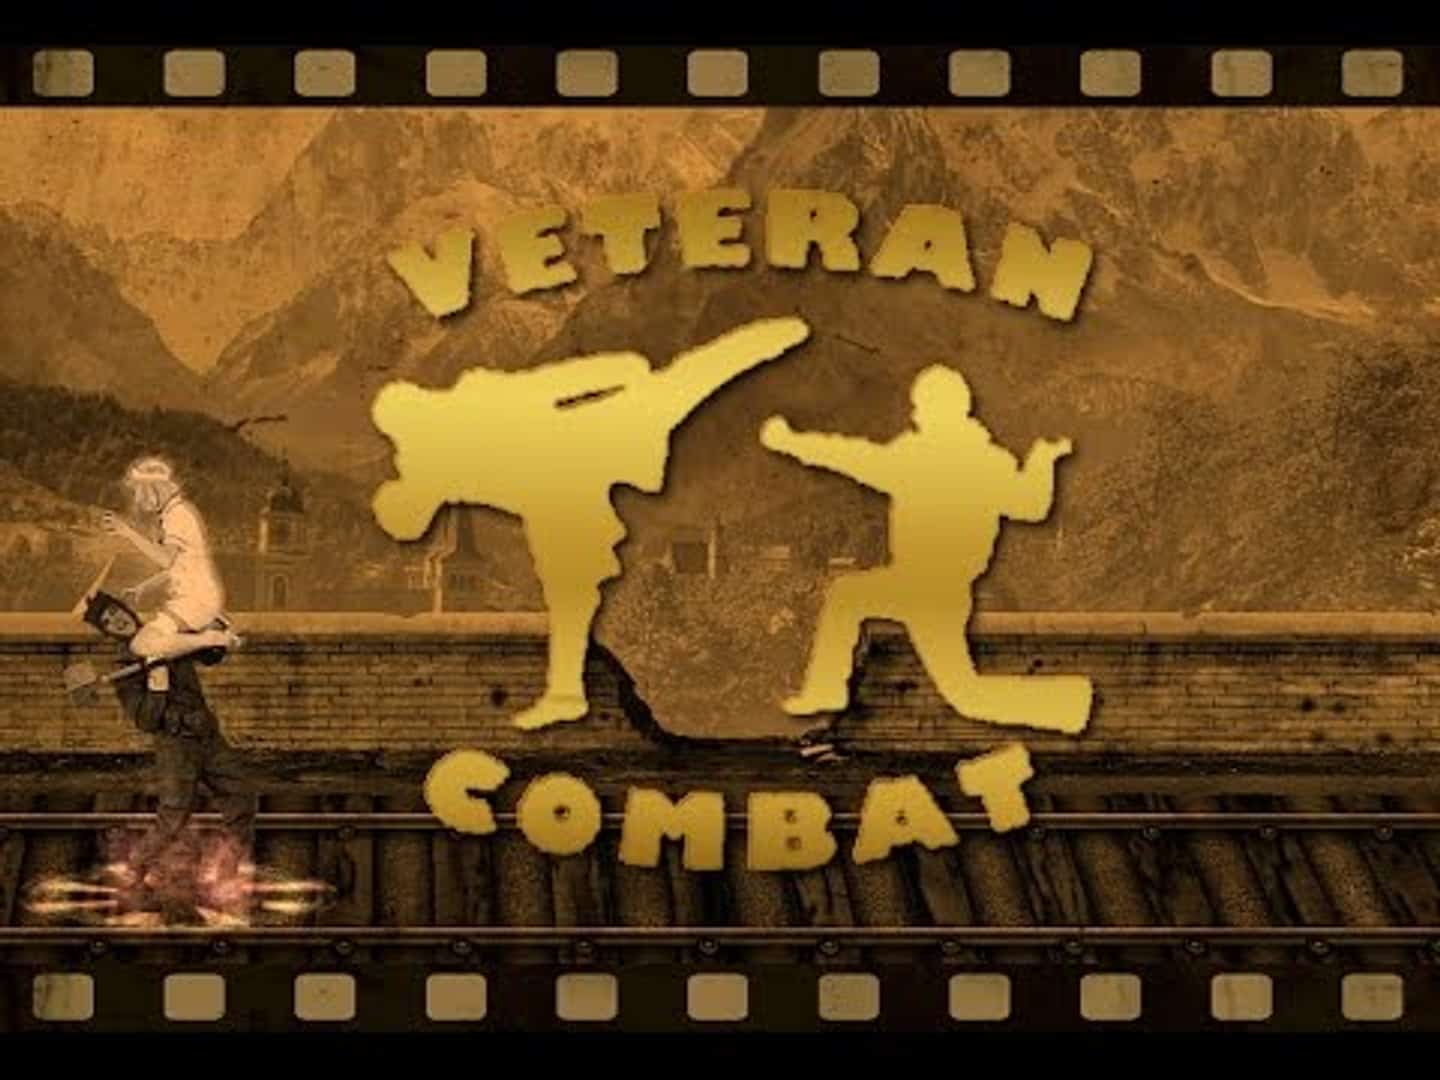 Veteran Combat